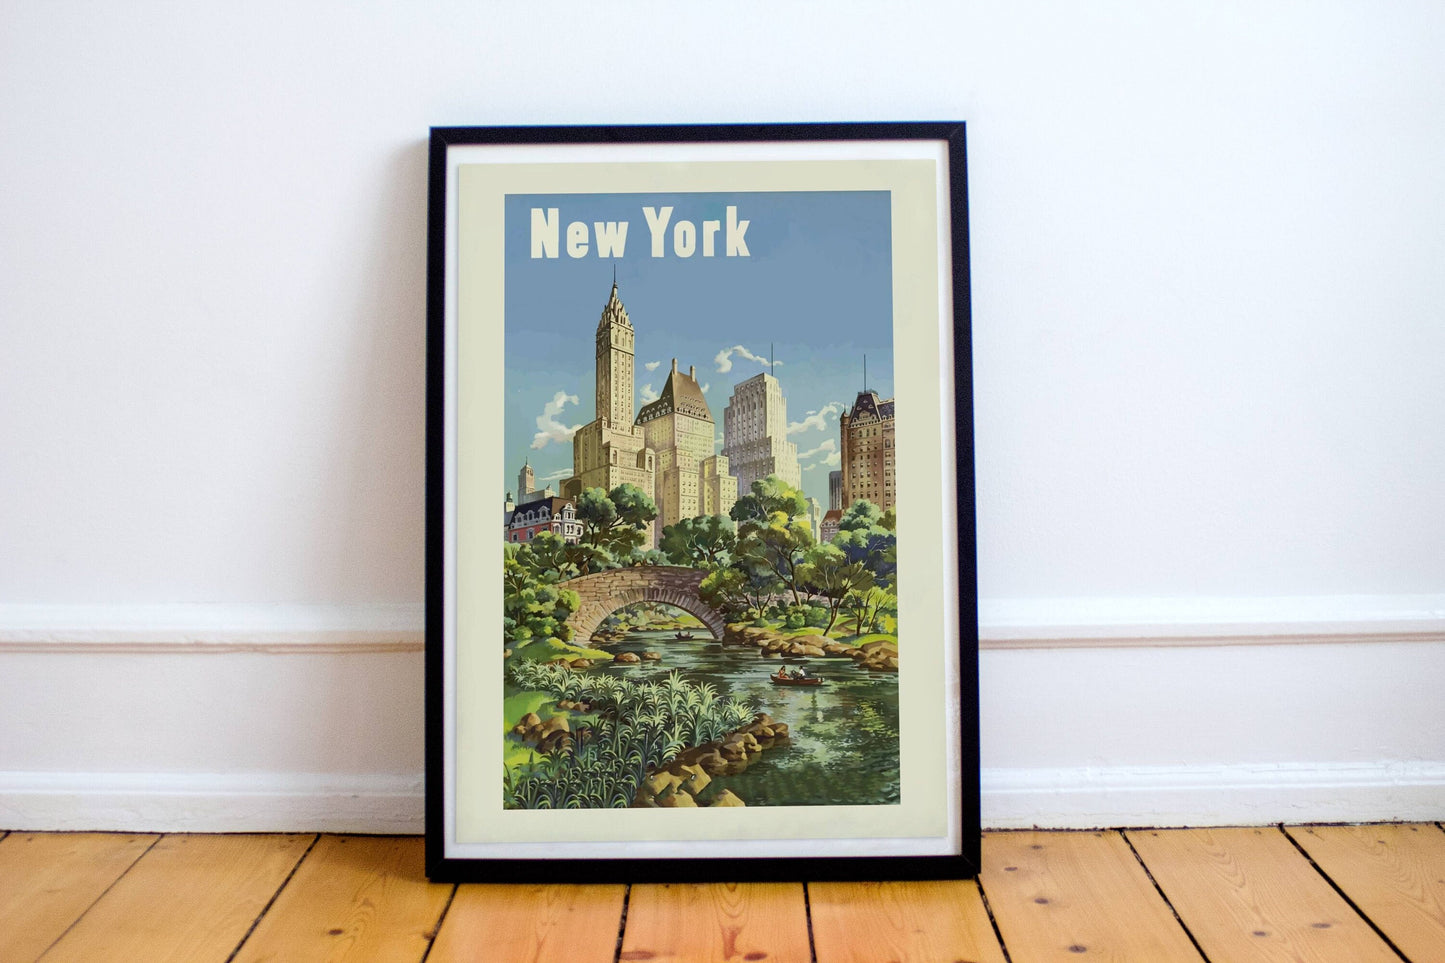 New York Inspired Wall Art Print - Poster | Unframed | A4 | New York Travel Poster | New York Gift | New York Image